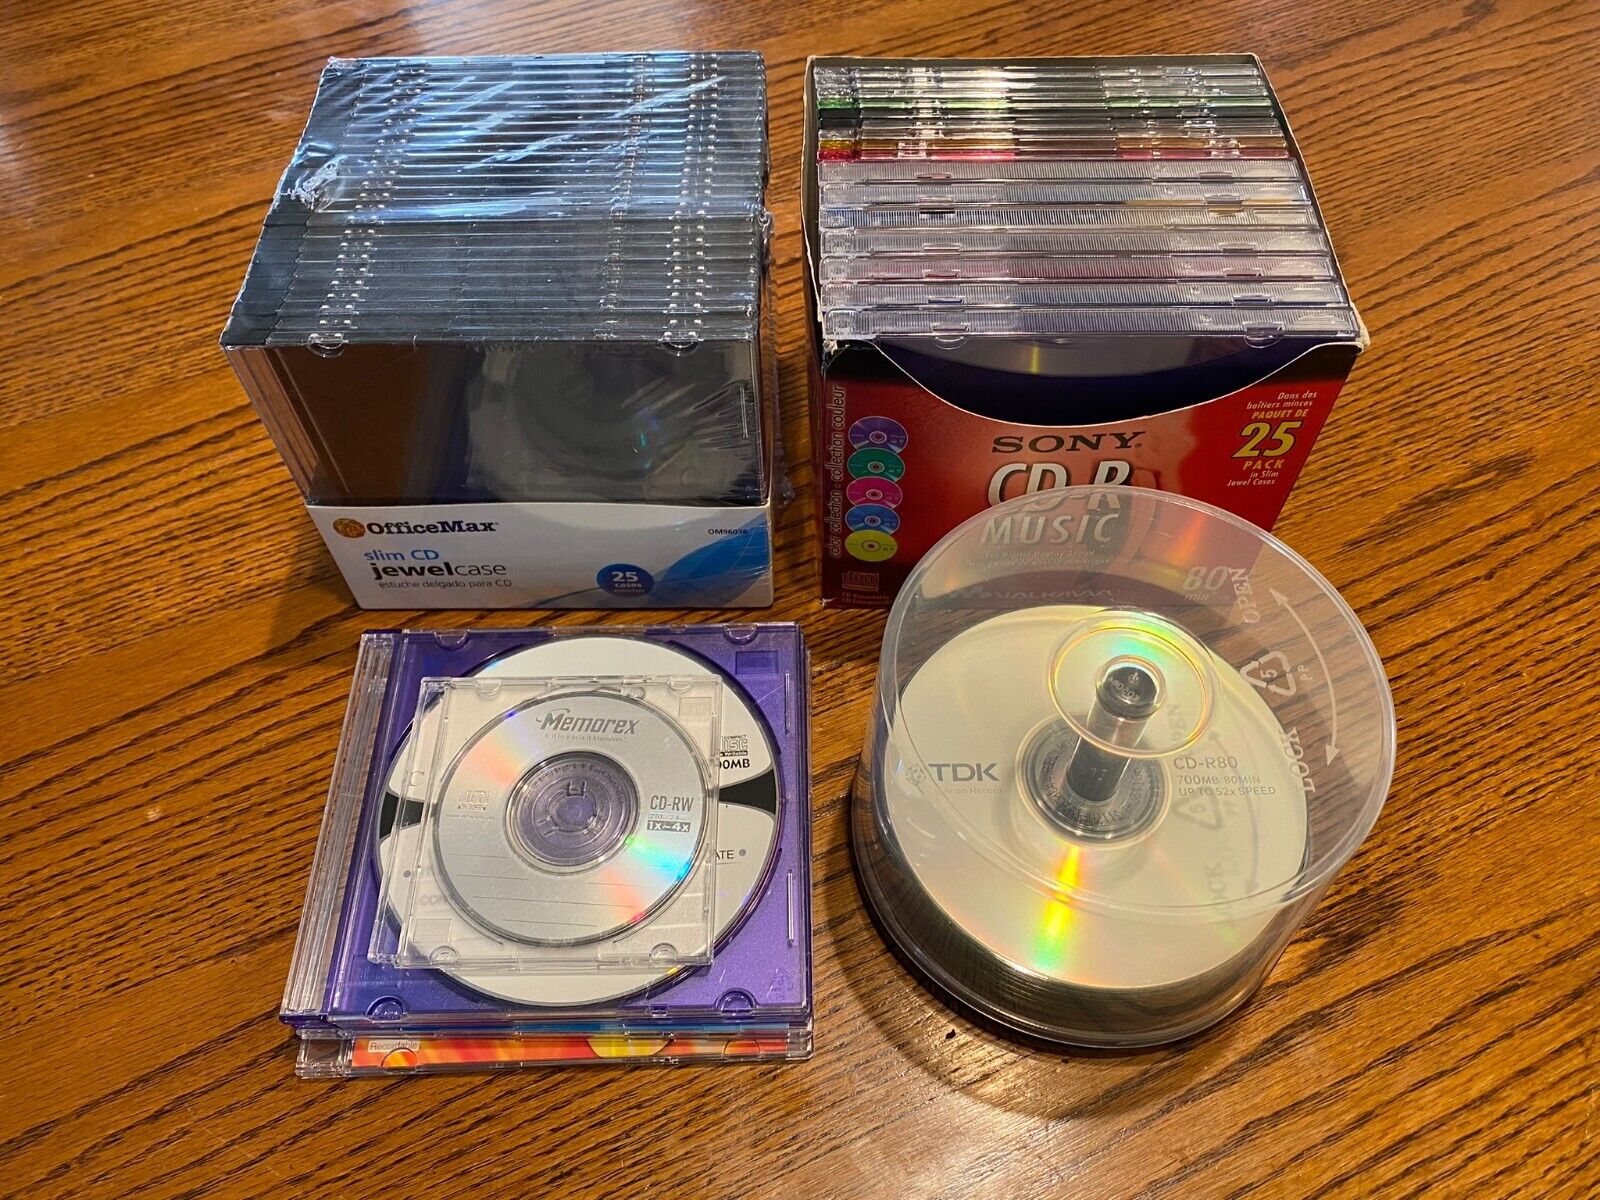  CD-R / CD-RW discs and jewel case bundle